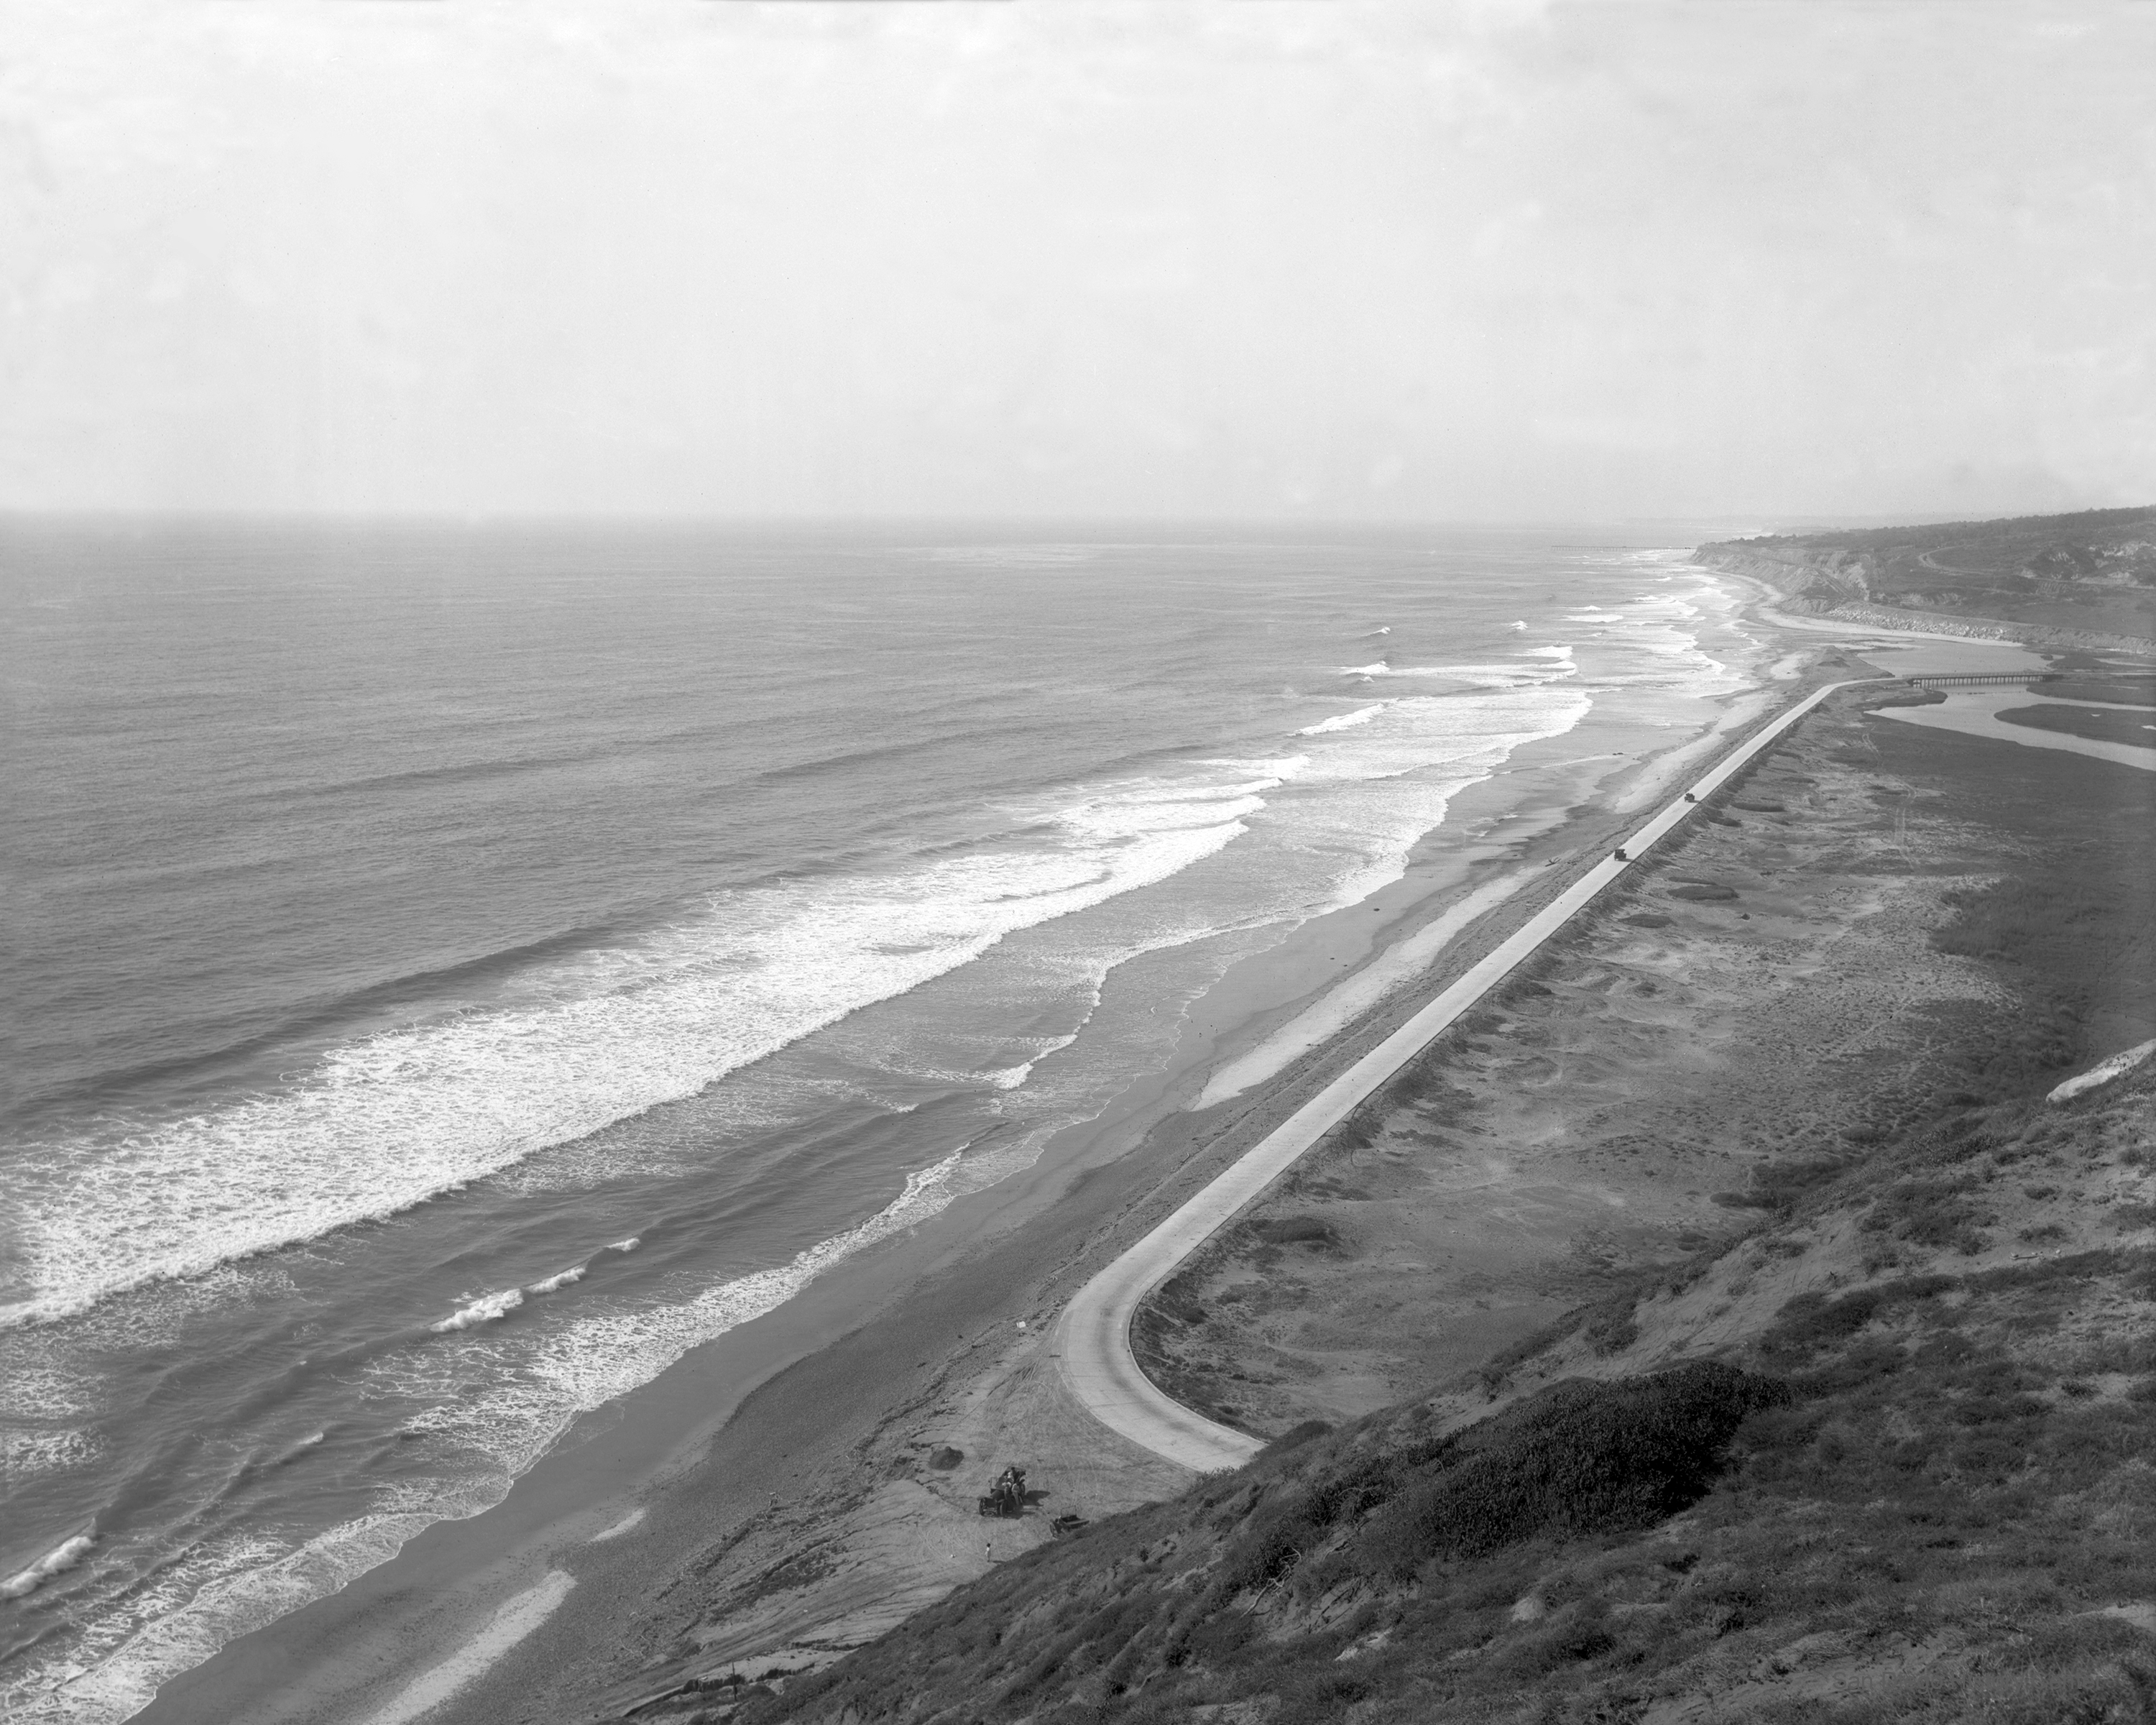 Coast Highway circa 1910. Photo from San Diego History Center.